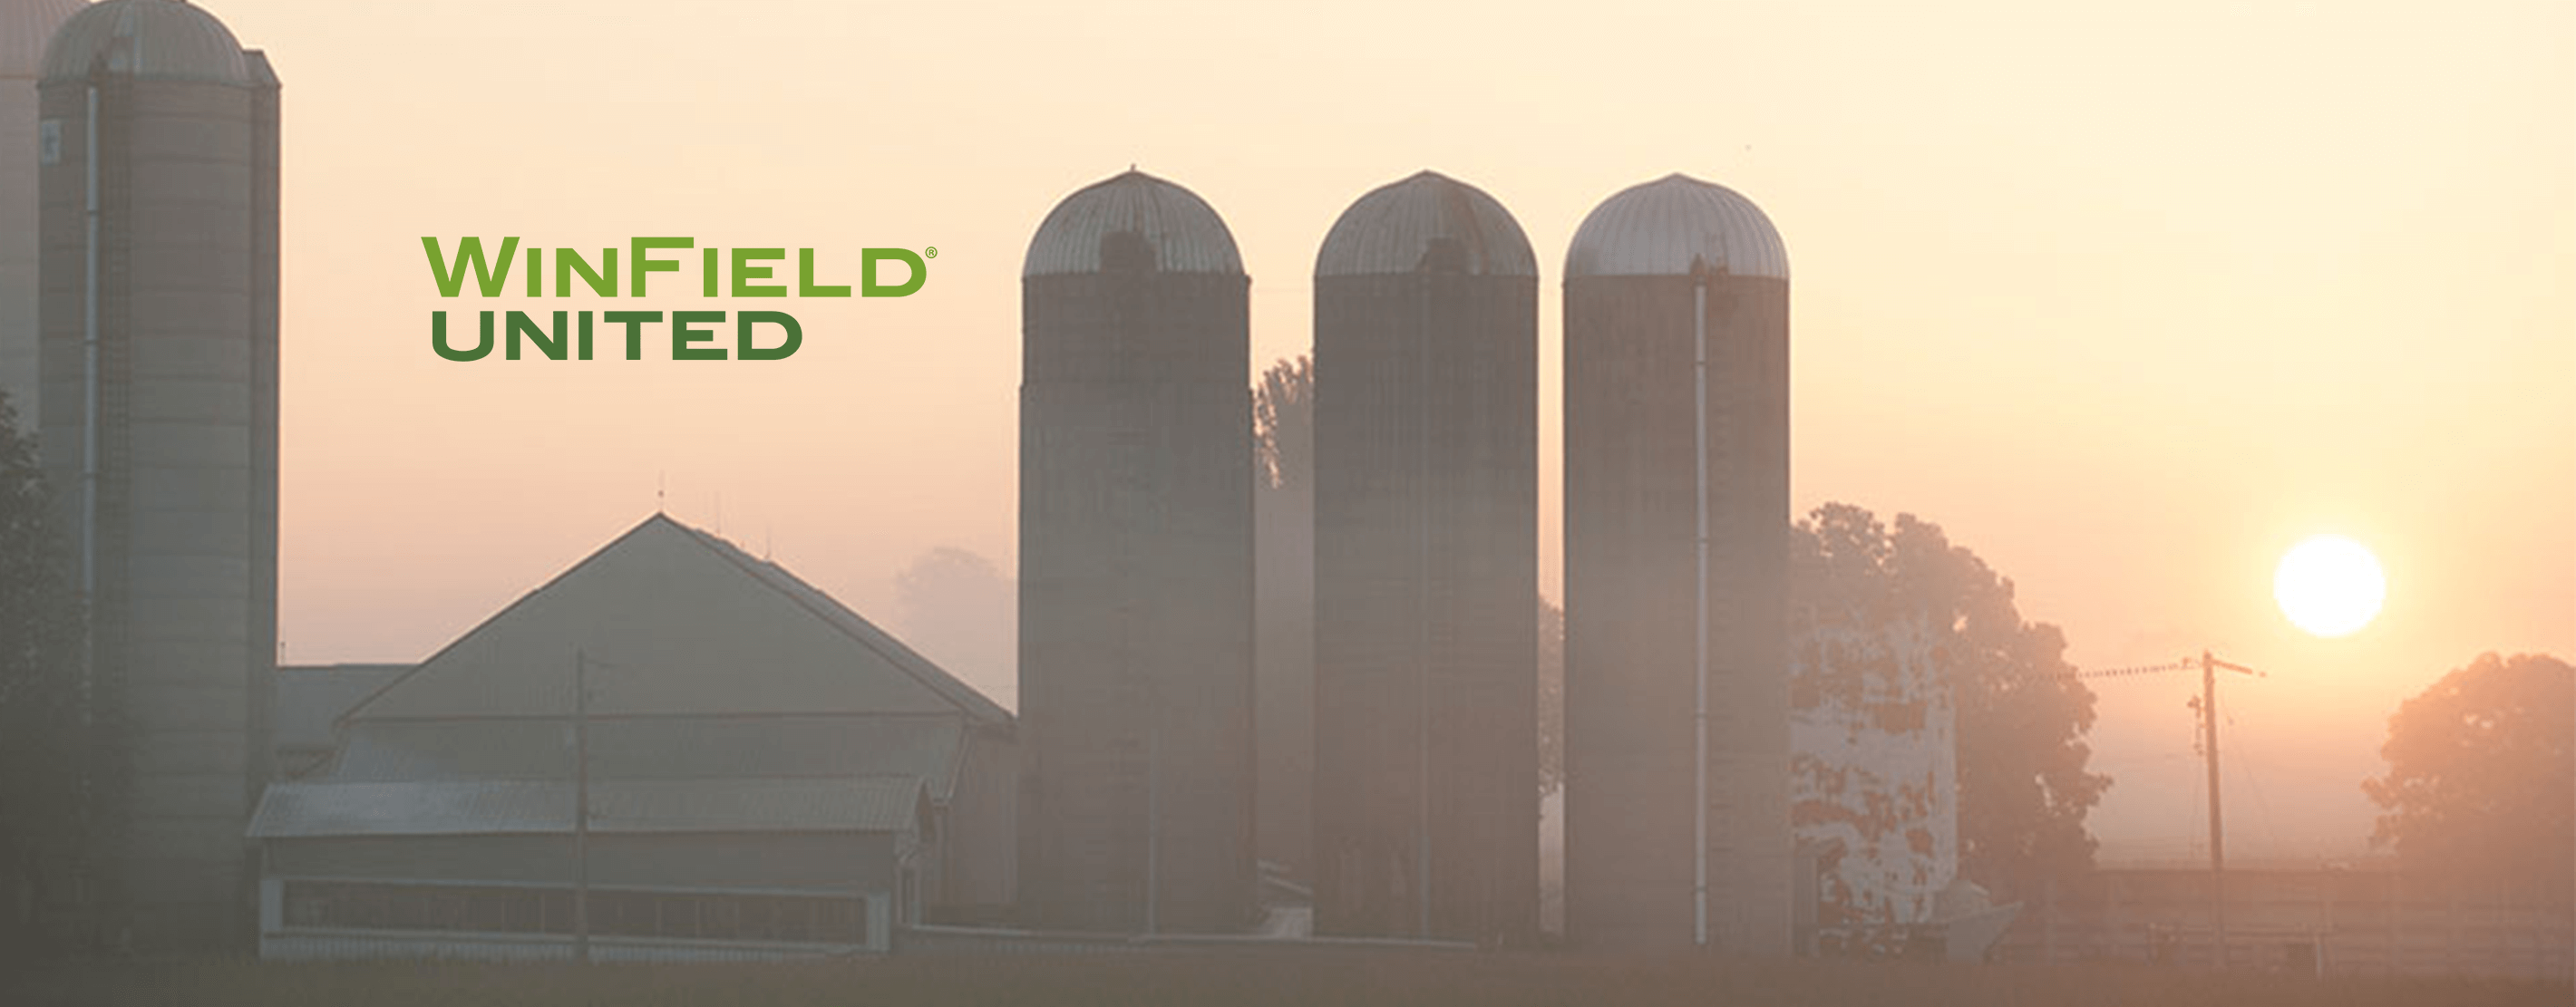 WinField United Logo Over A Farm At Sunrise